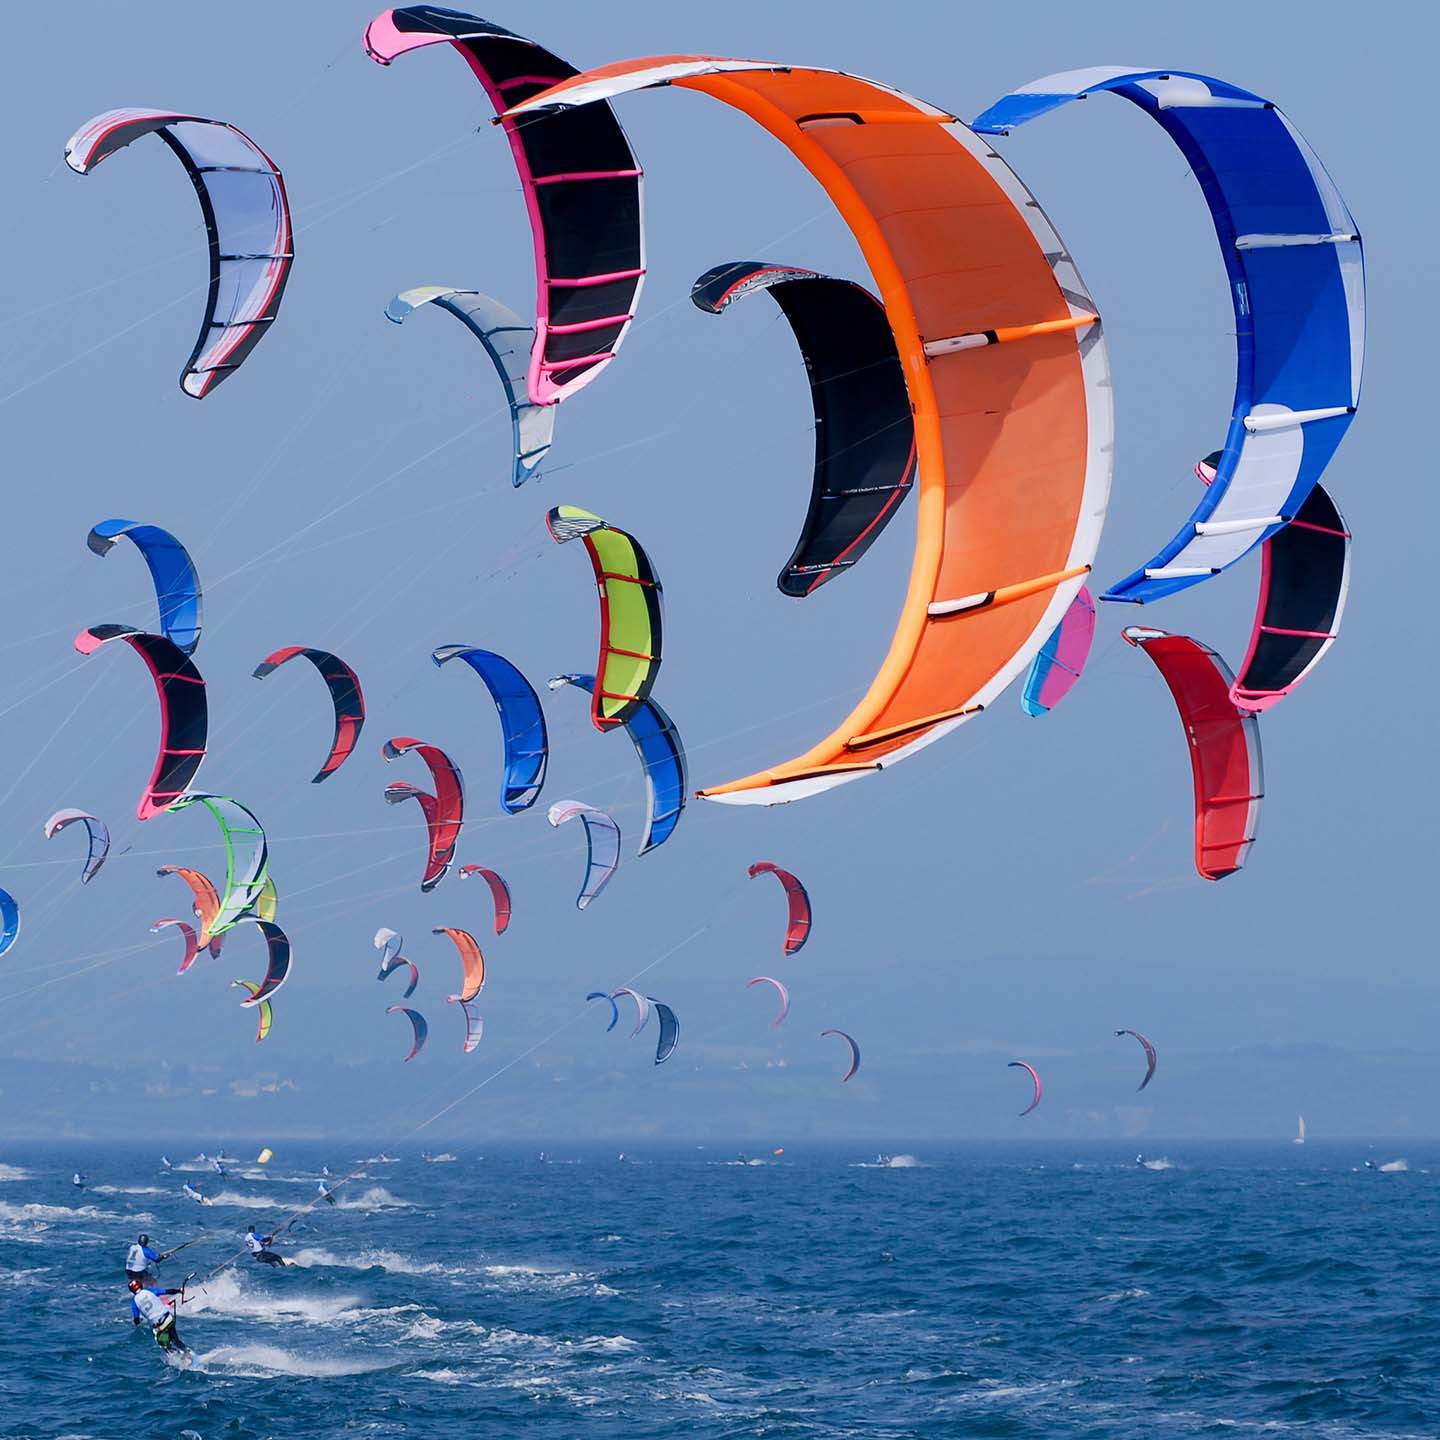 Kite surfing  on the sea